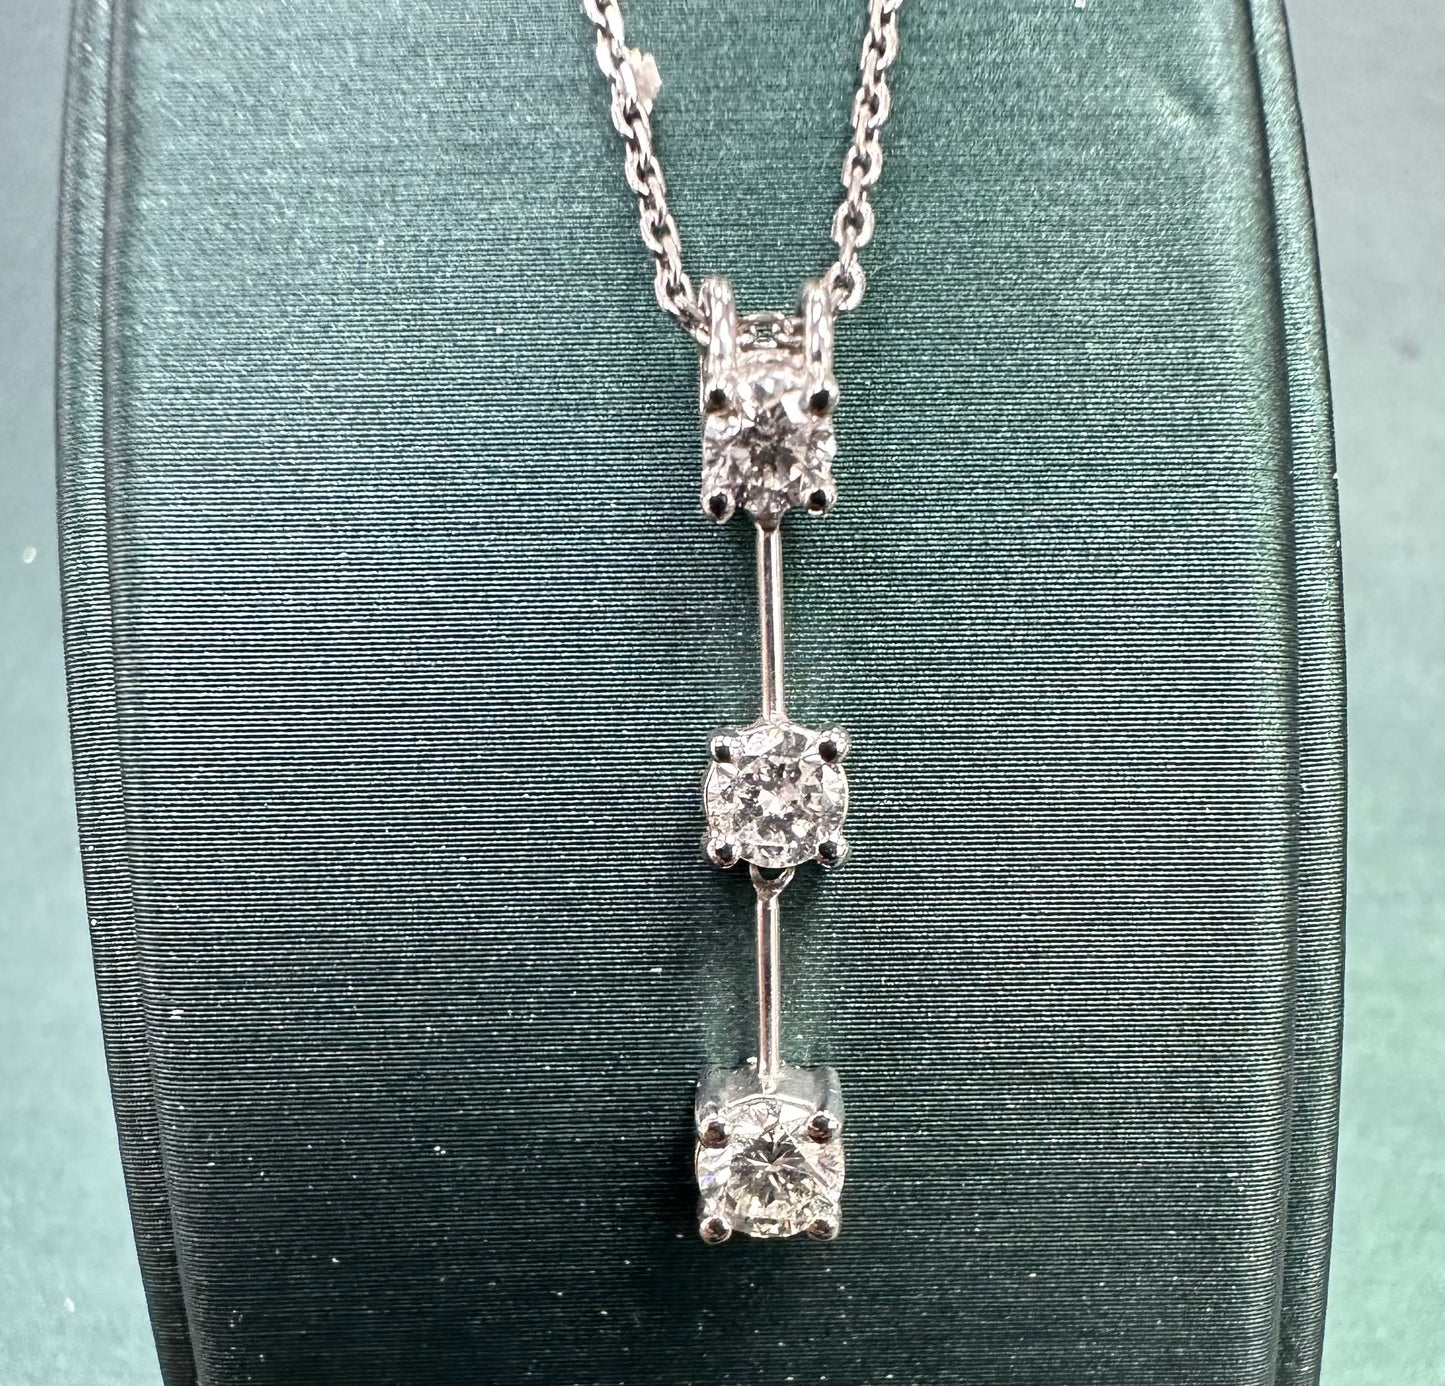 Triple diamond droplet necklace